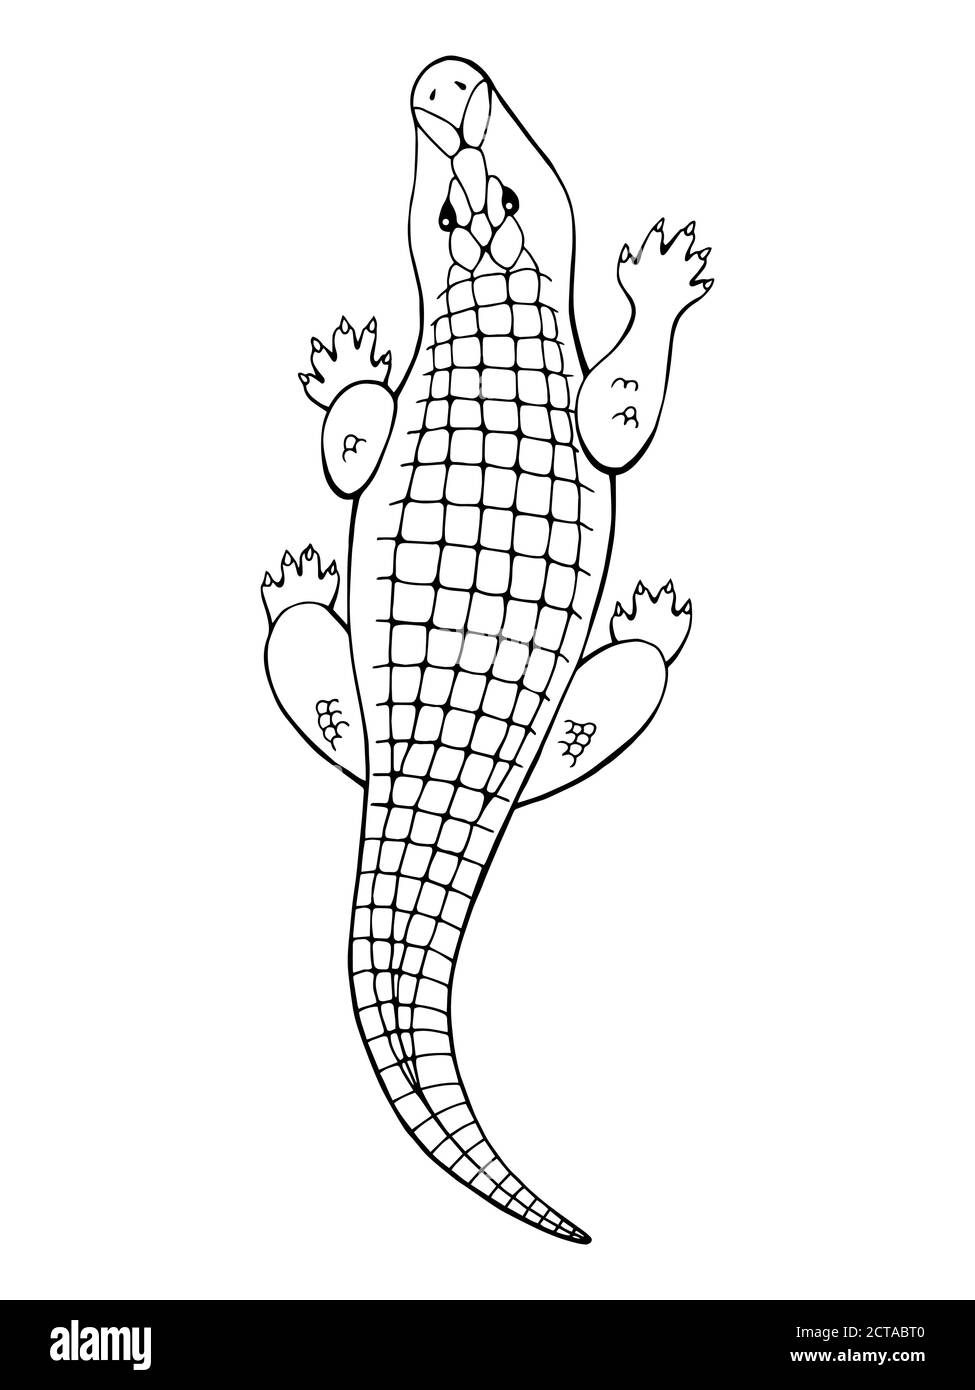 Crocodile animal graphic black white isolated illustration vector Stock Vector